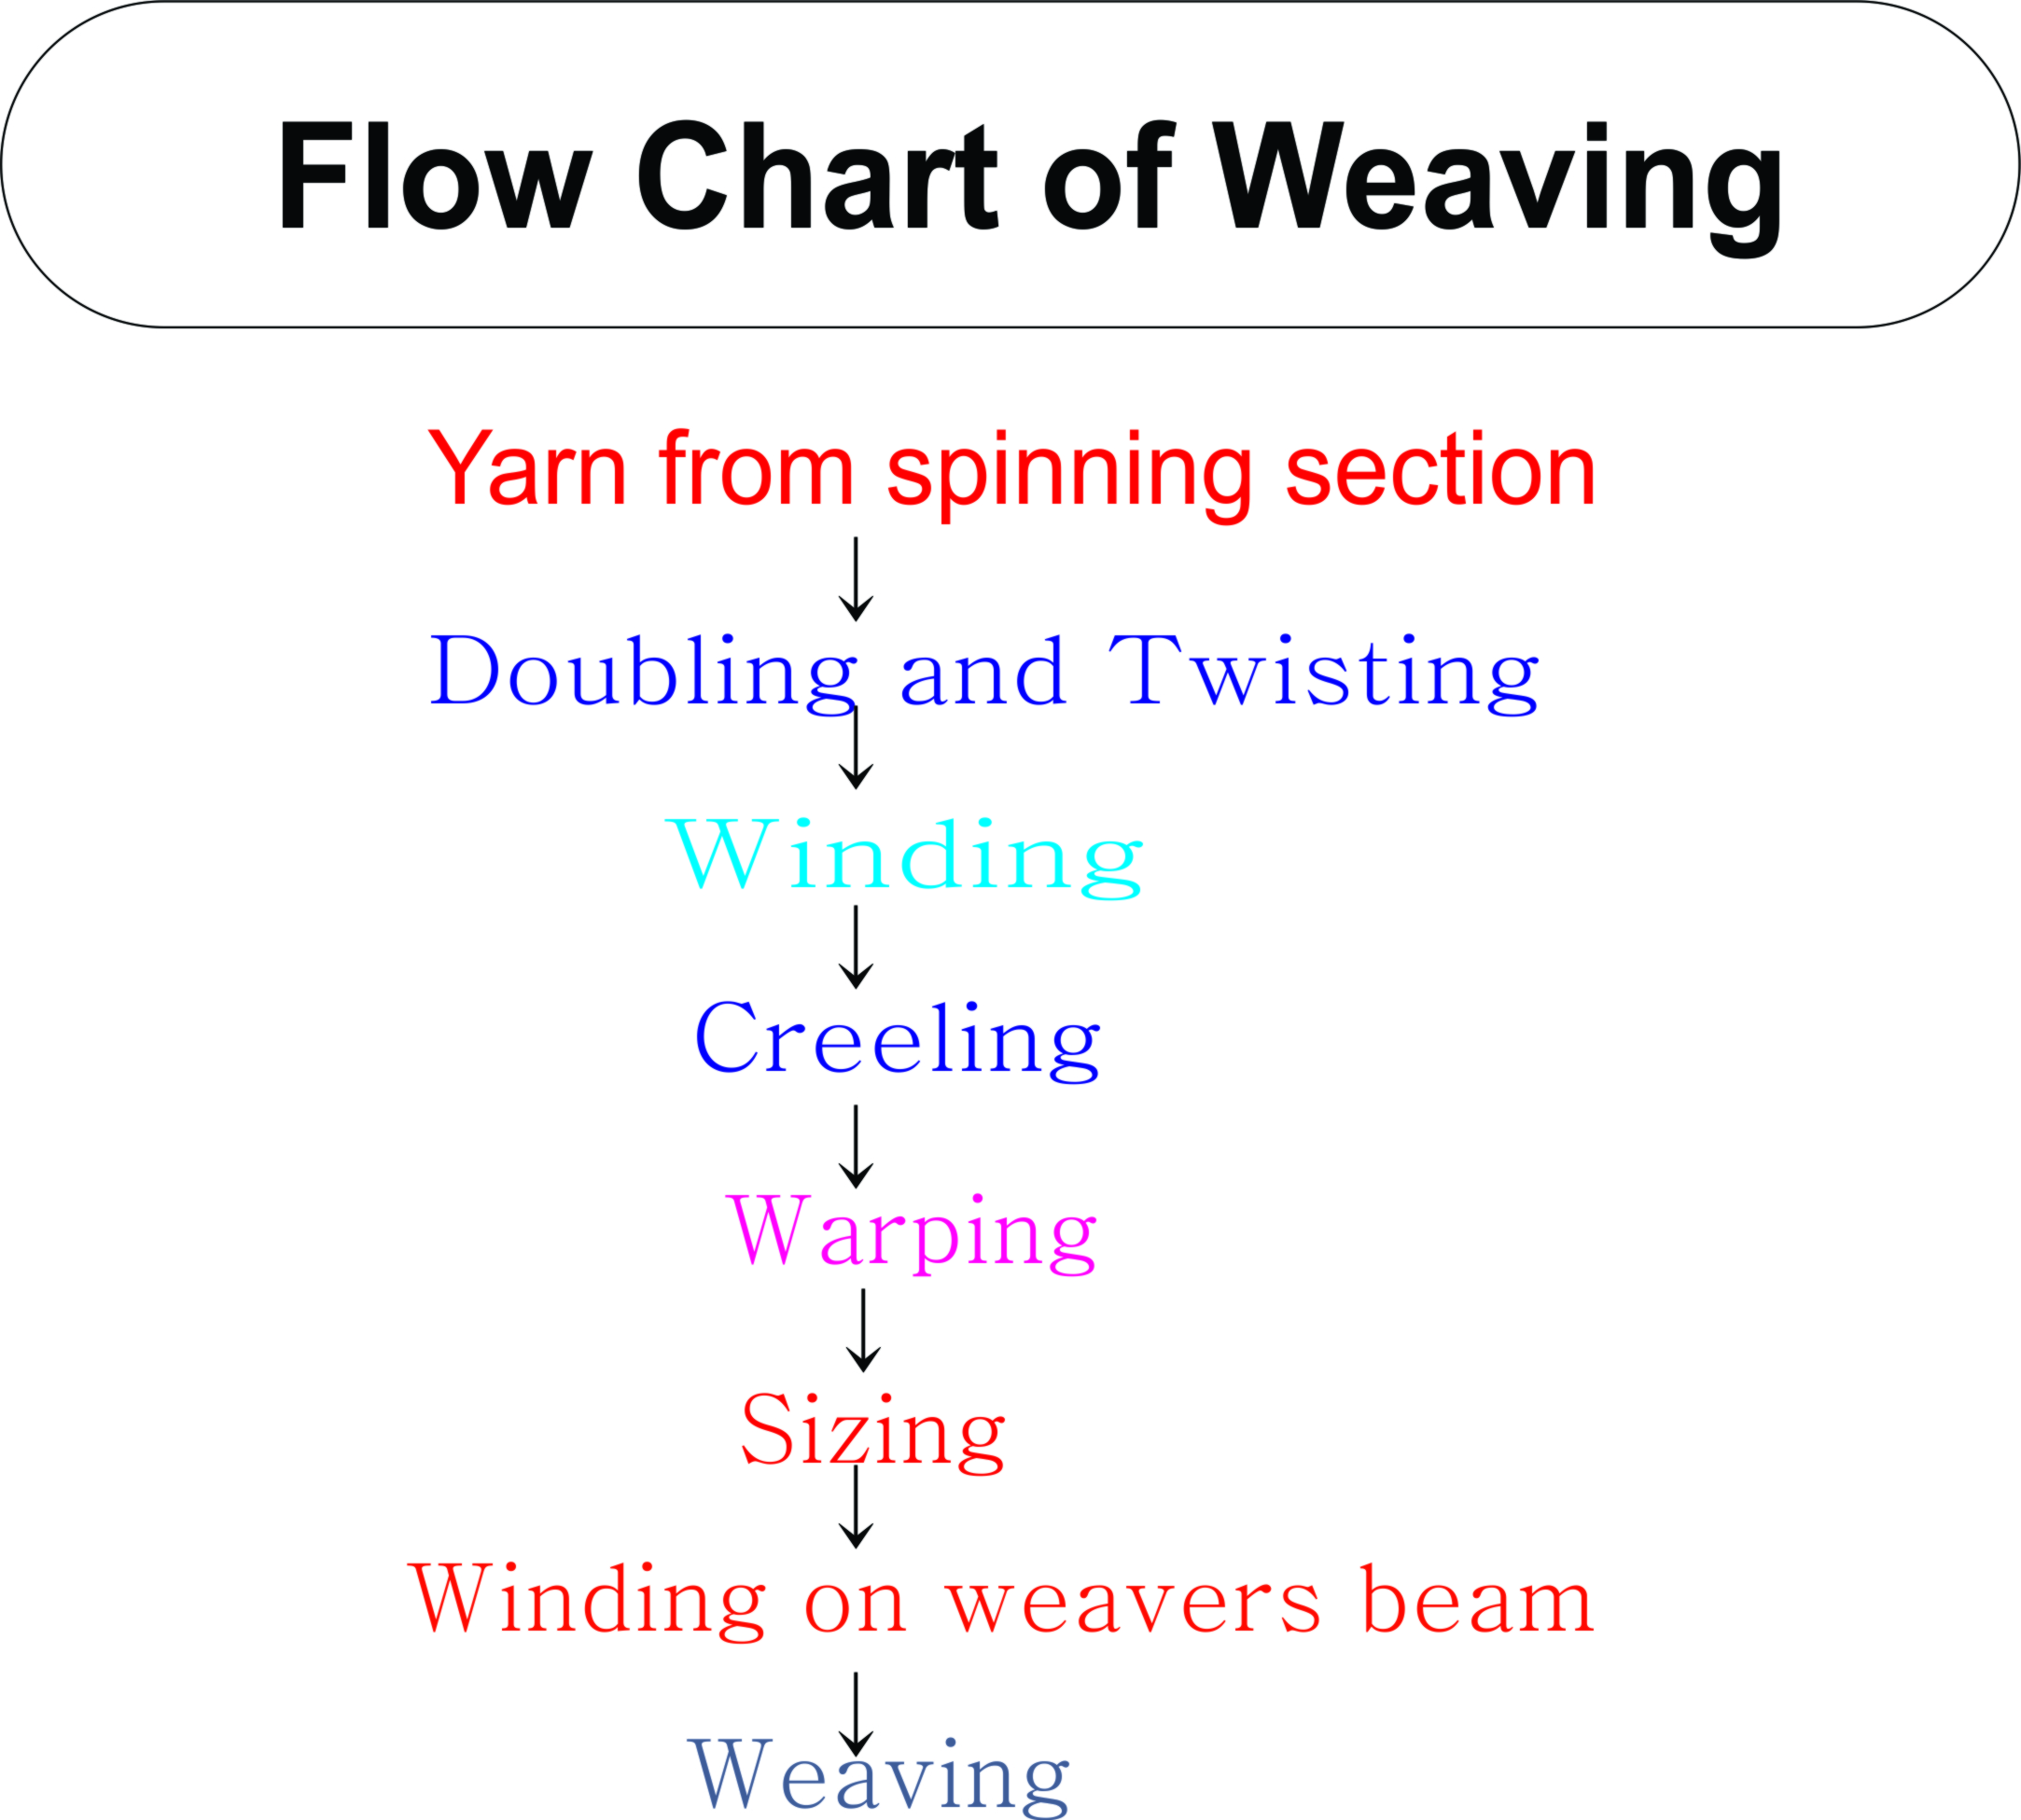 Flow Chart of Weaving 